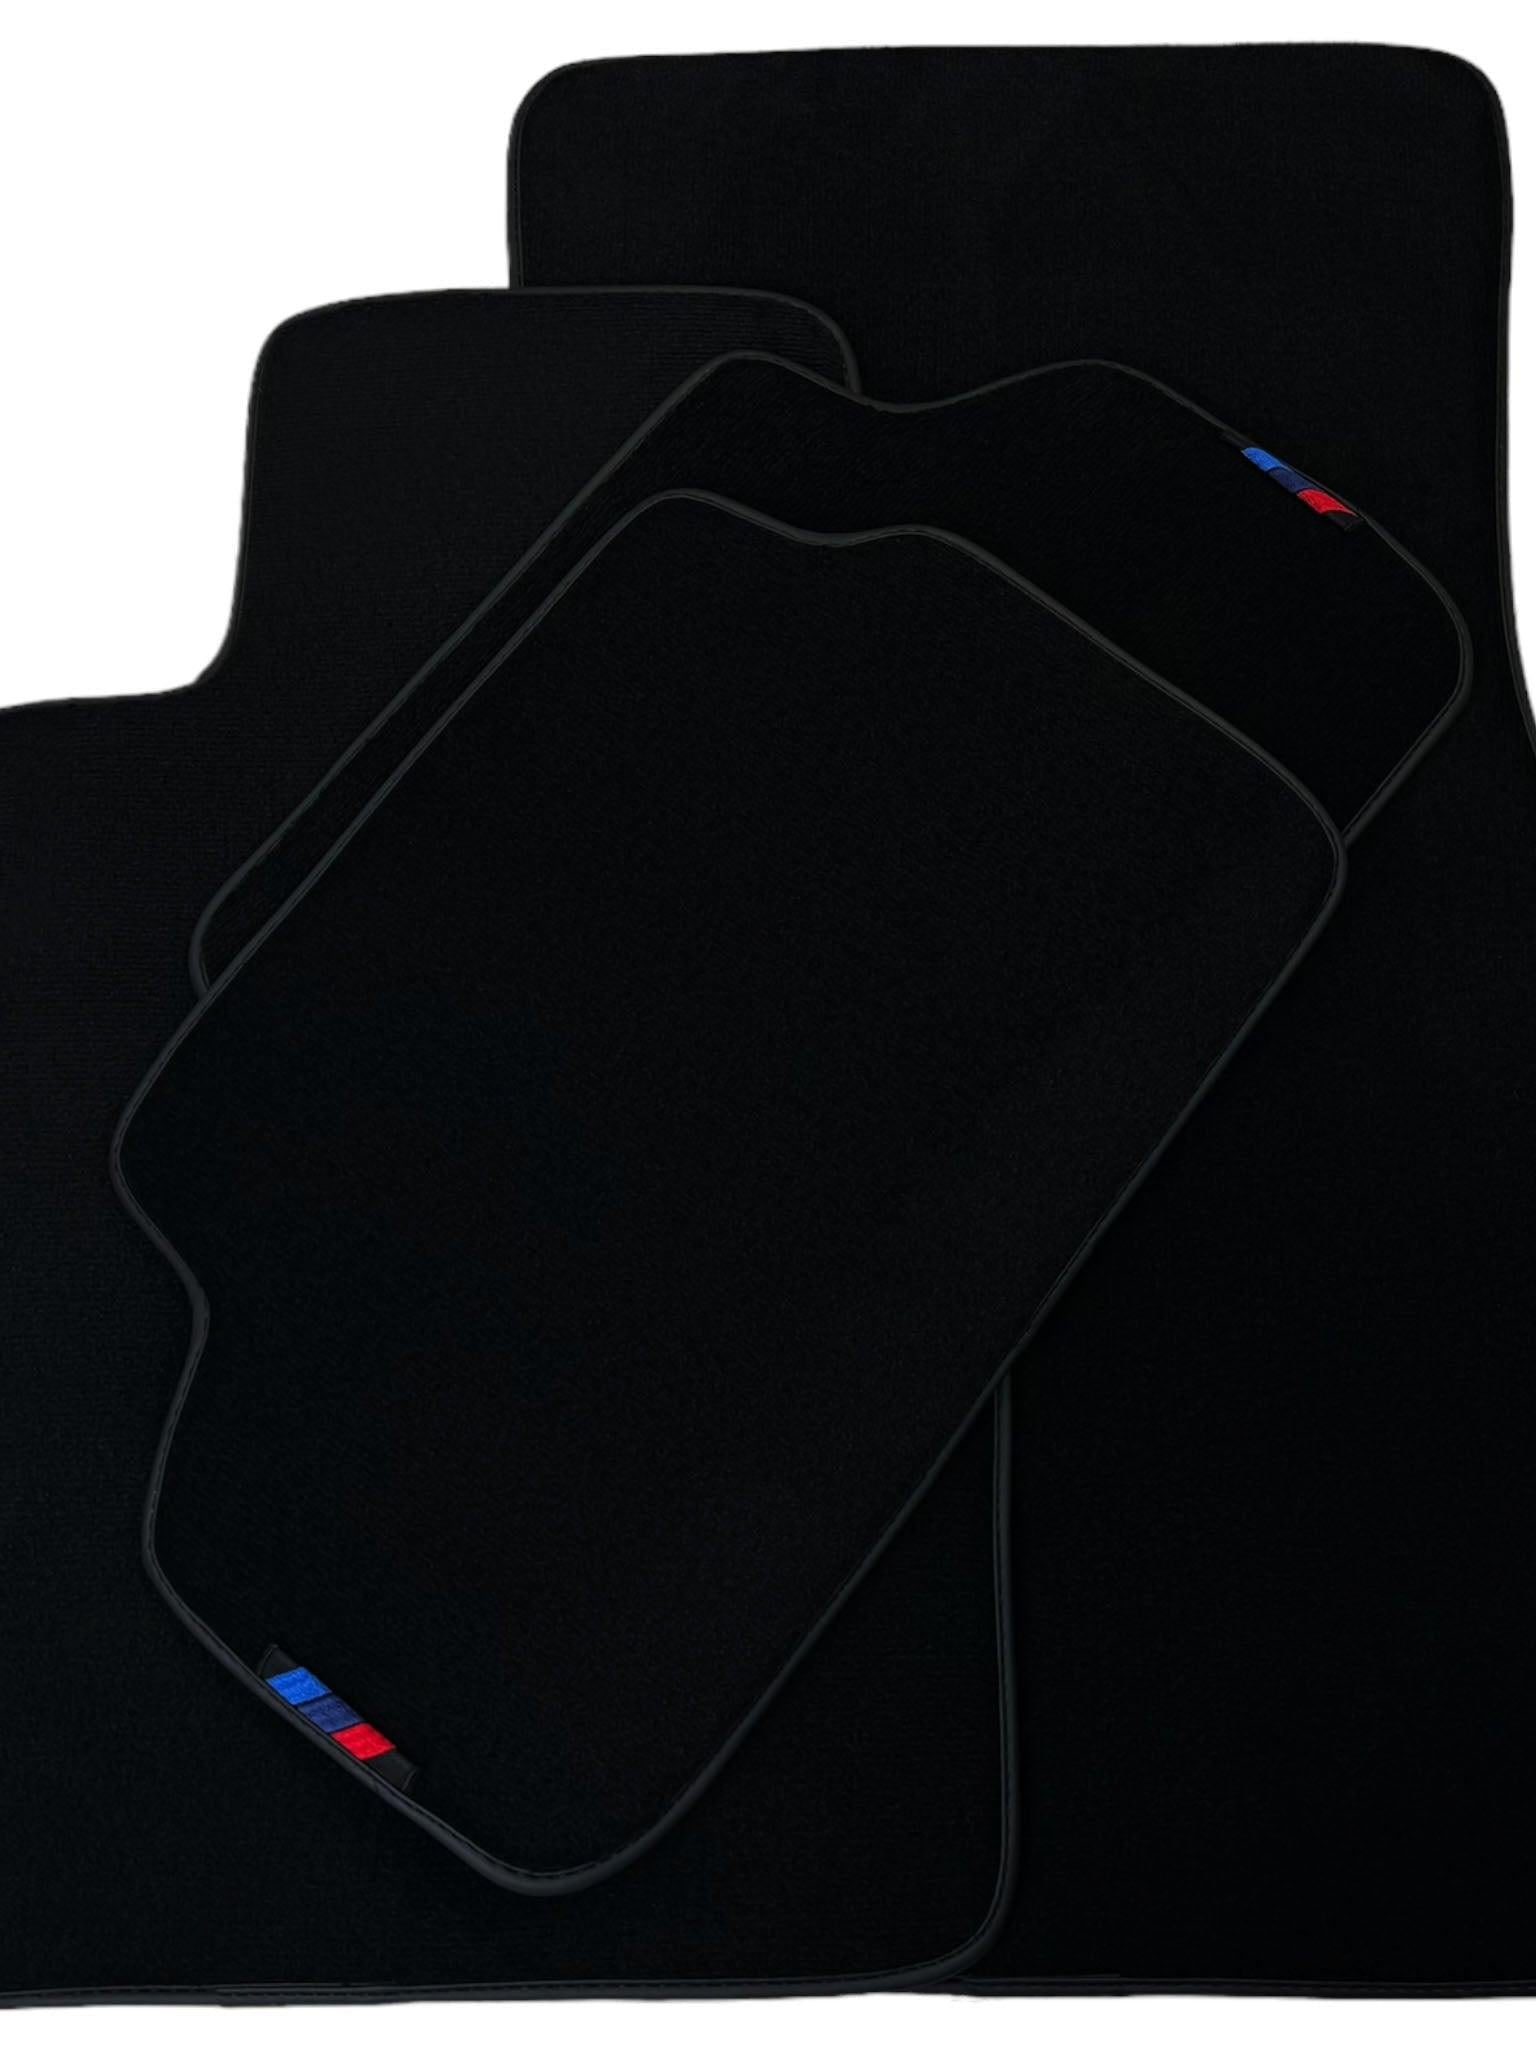 Black Floor Floor Mats For BMW 6 Series G32 GT Gran Turismo | Fighter Jet Edition AutoWin Brand |Black Trim